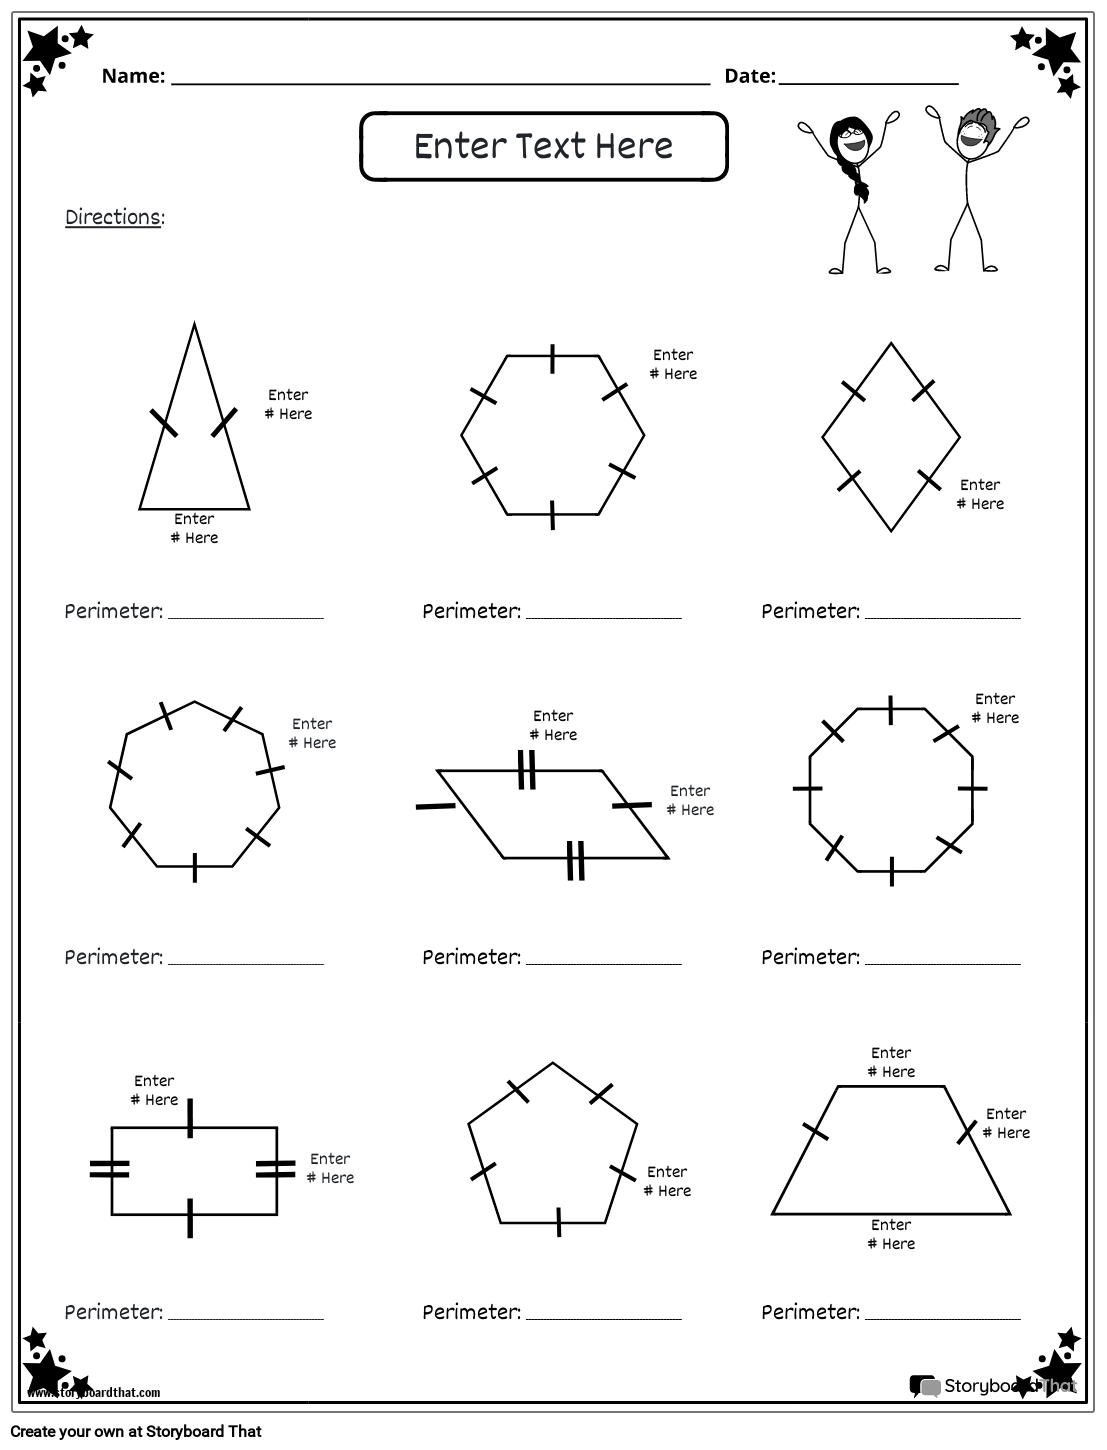 perimeter-2-storyboard-av-worksheet-templates